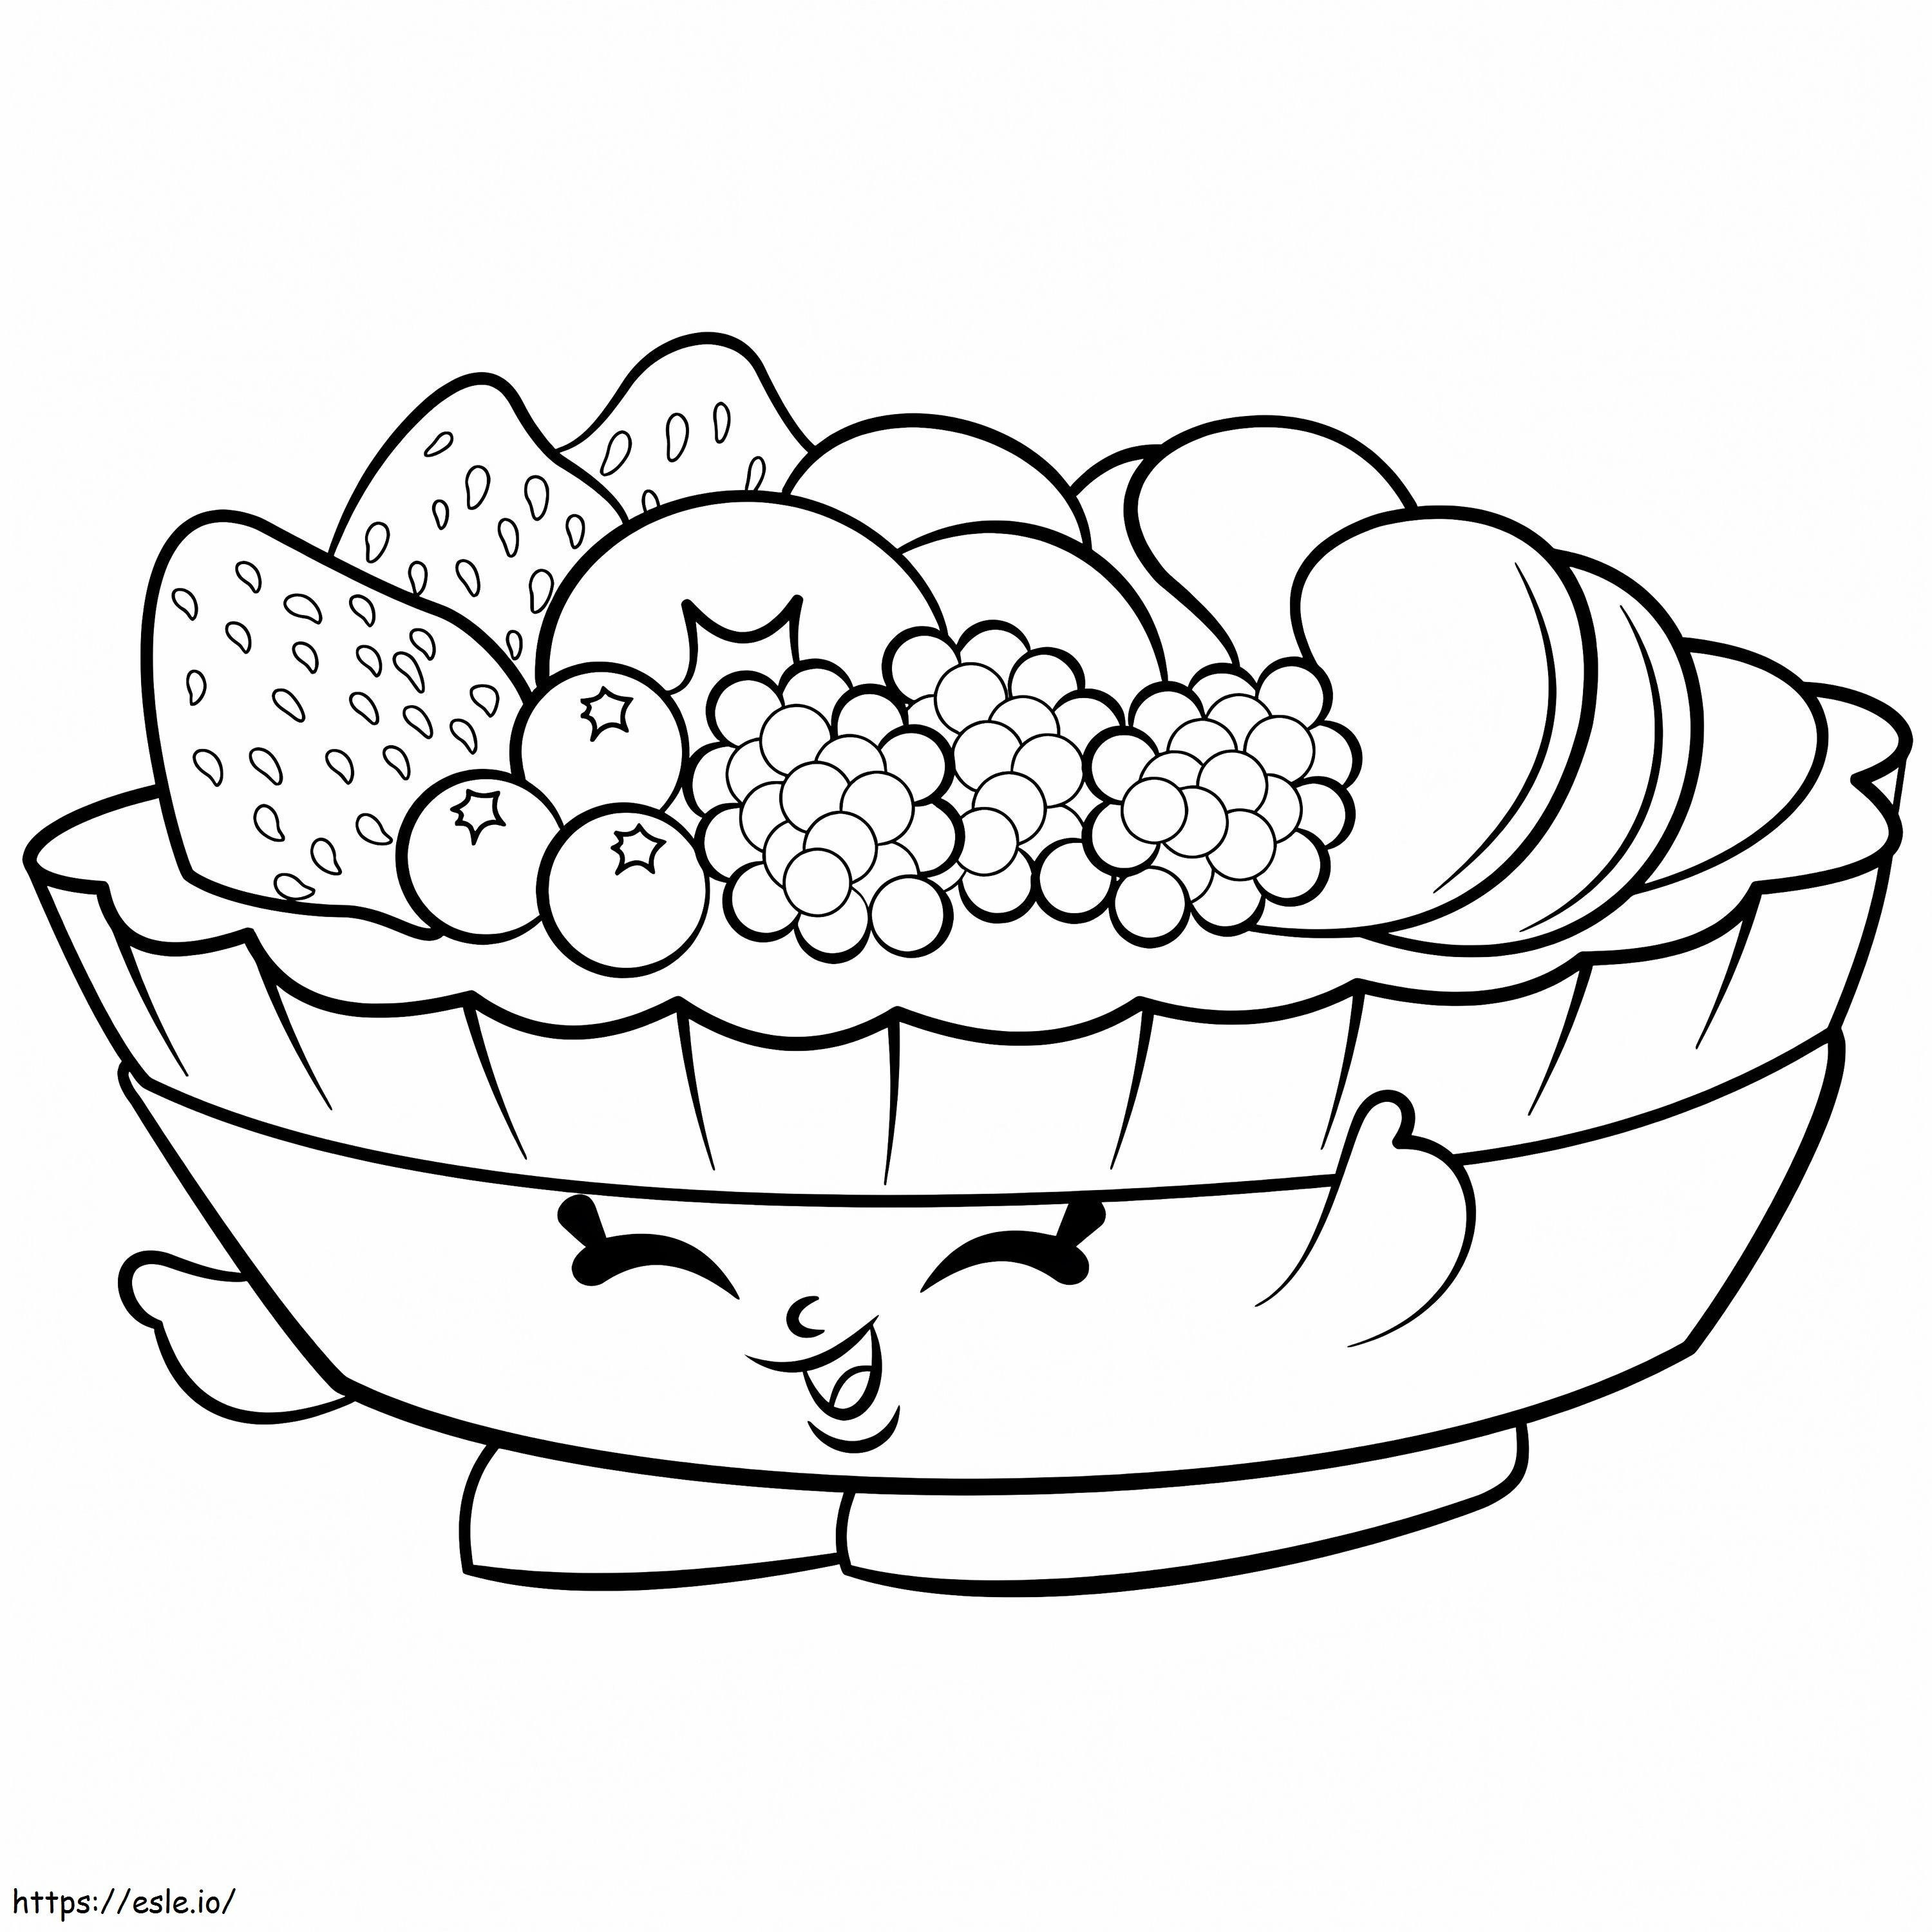 salad coloring page